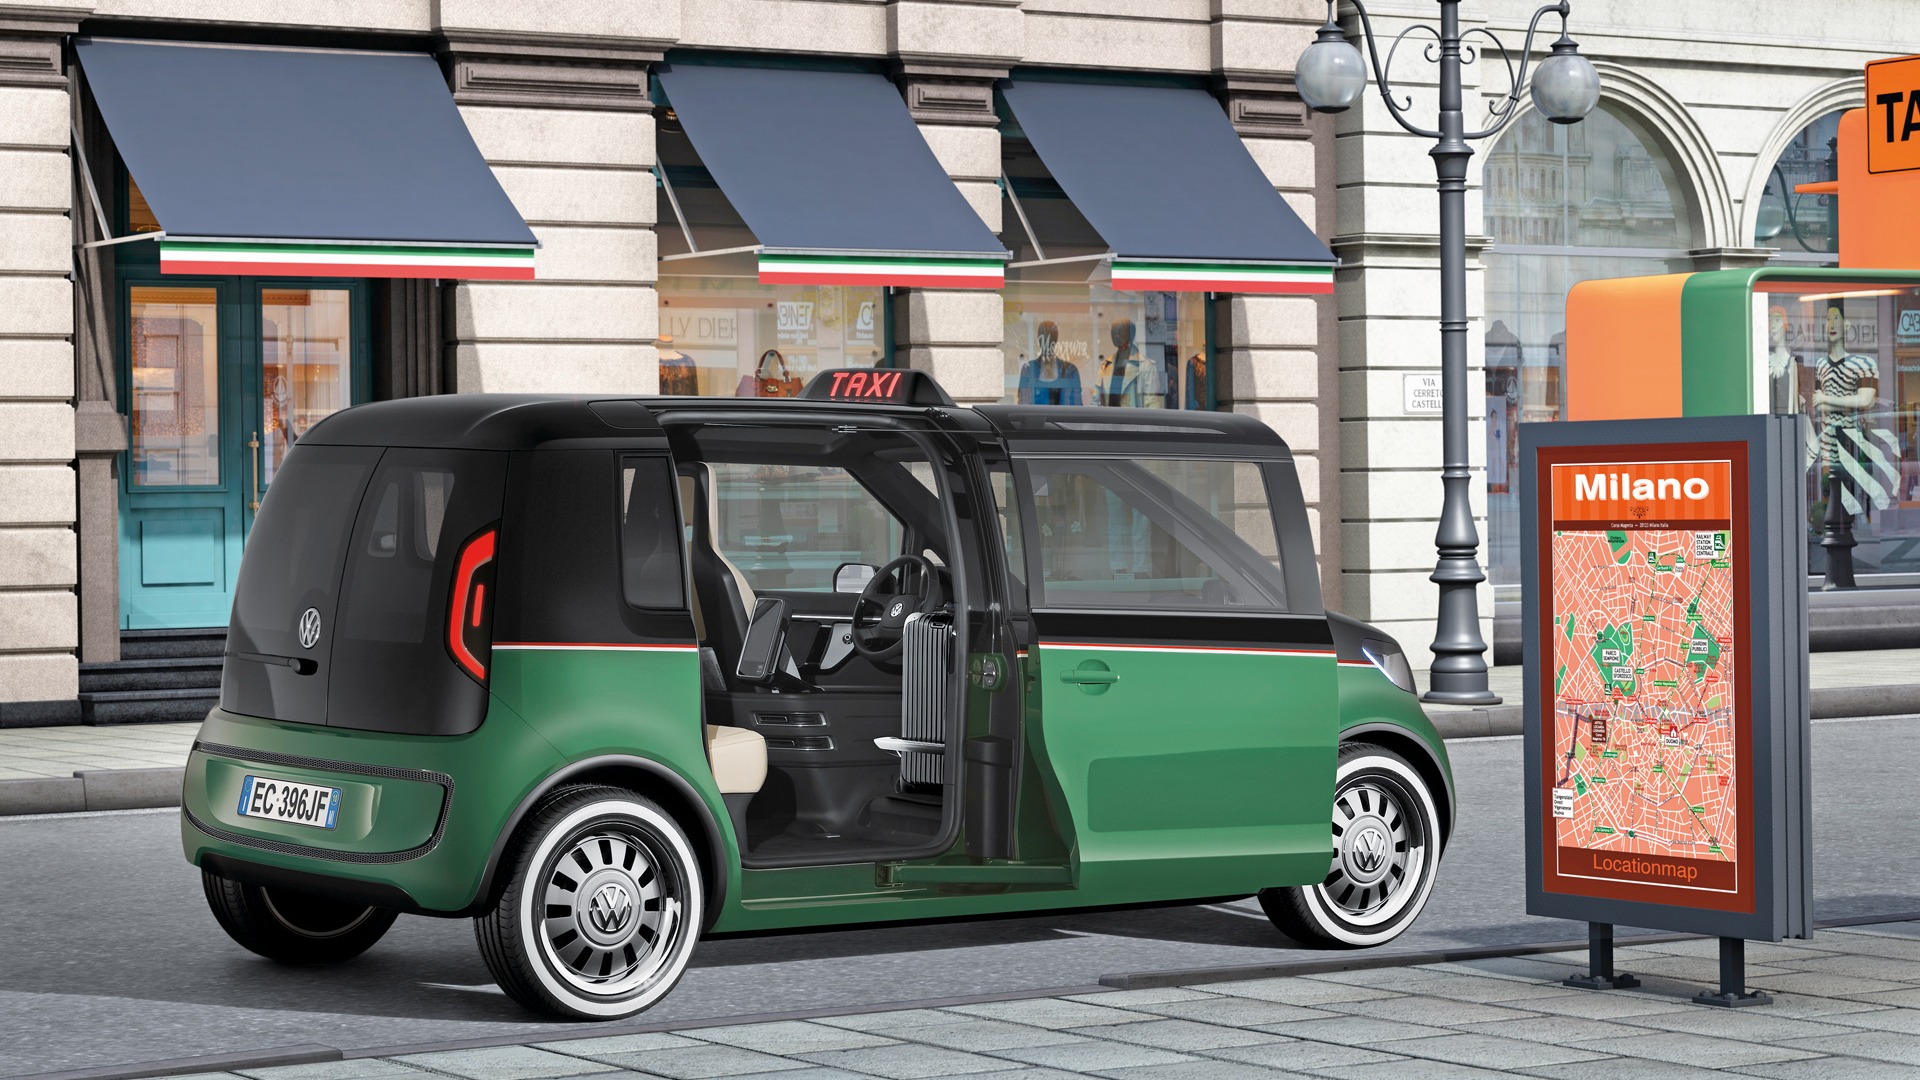 Concept Car Volkswagen Milano Taxi - 2010 大众7 - 1920x1080